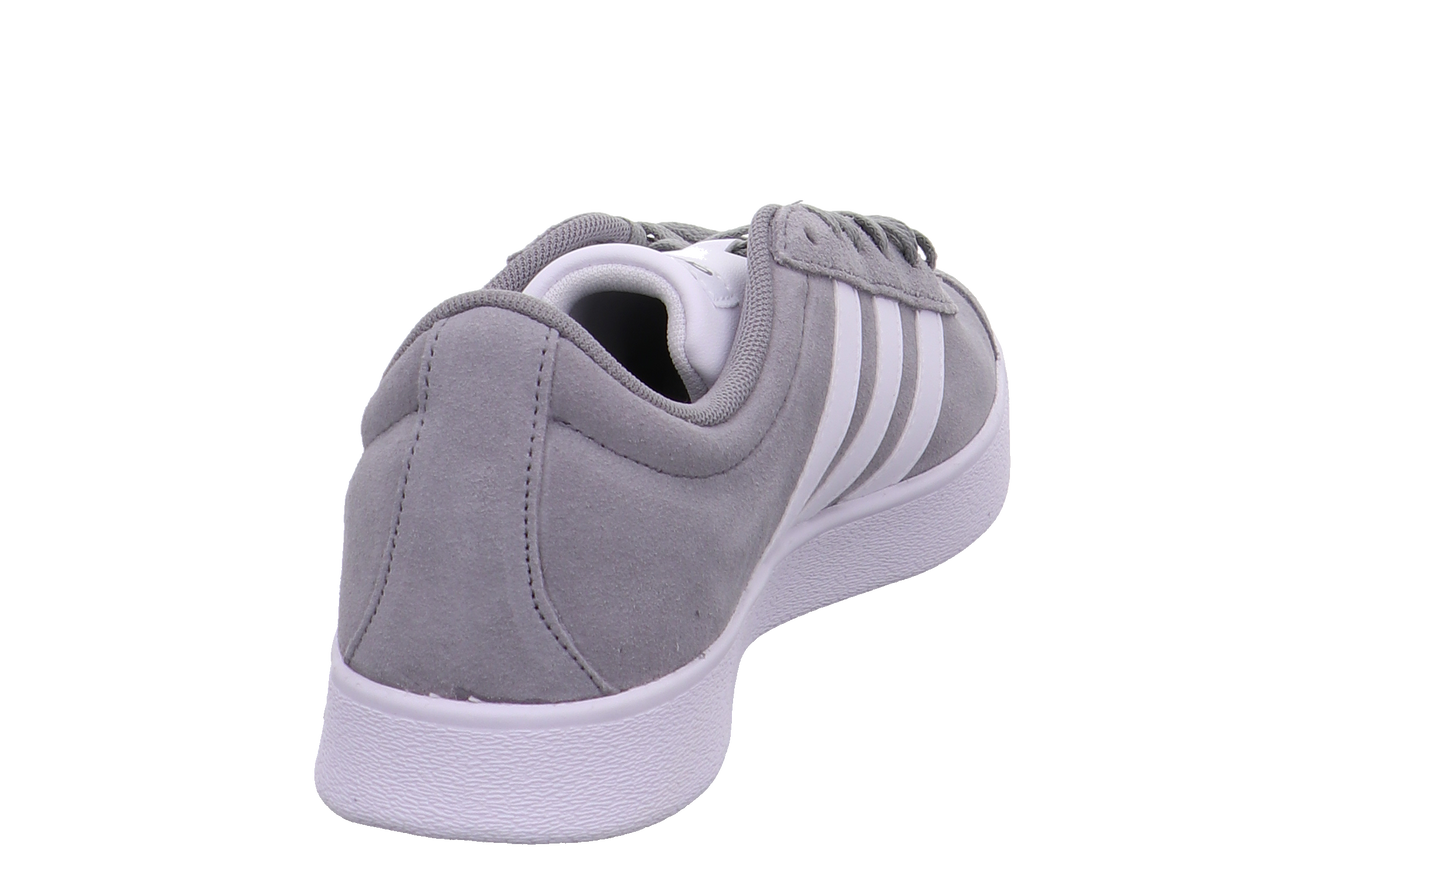 Adidas AG Sneaker grau kombi Bild7